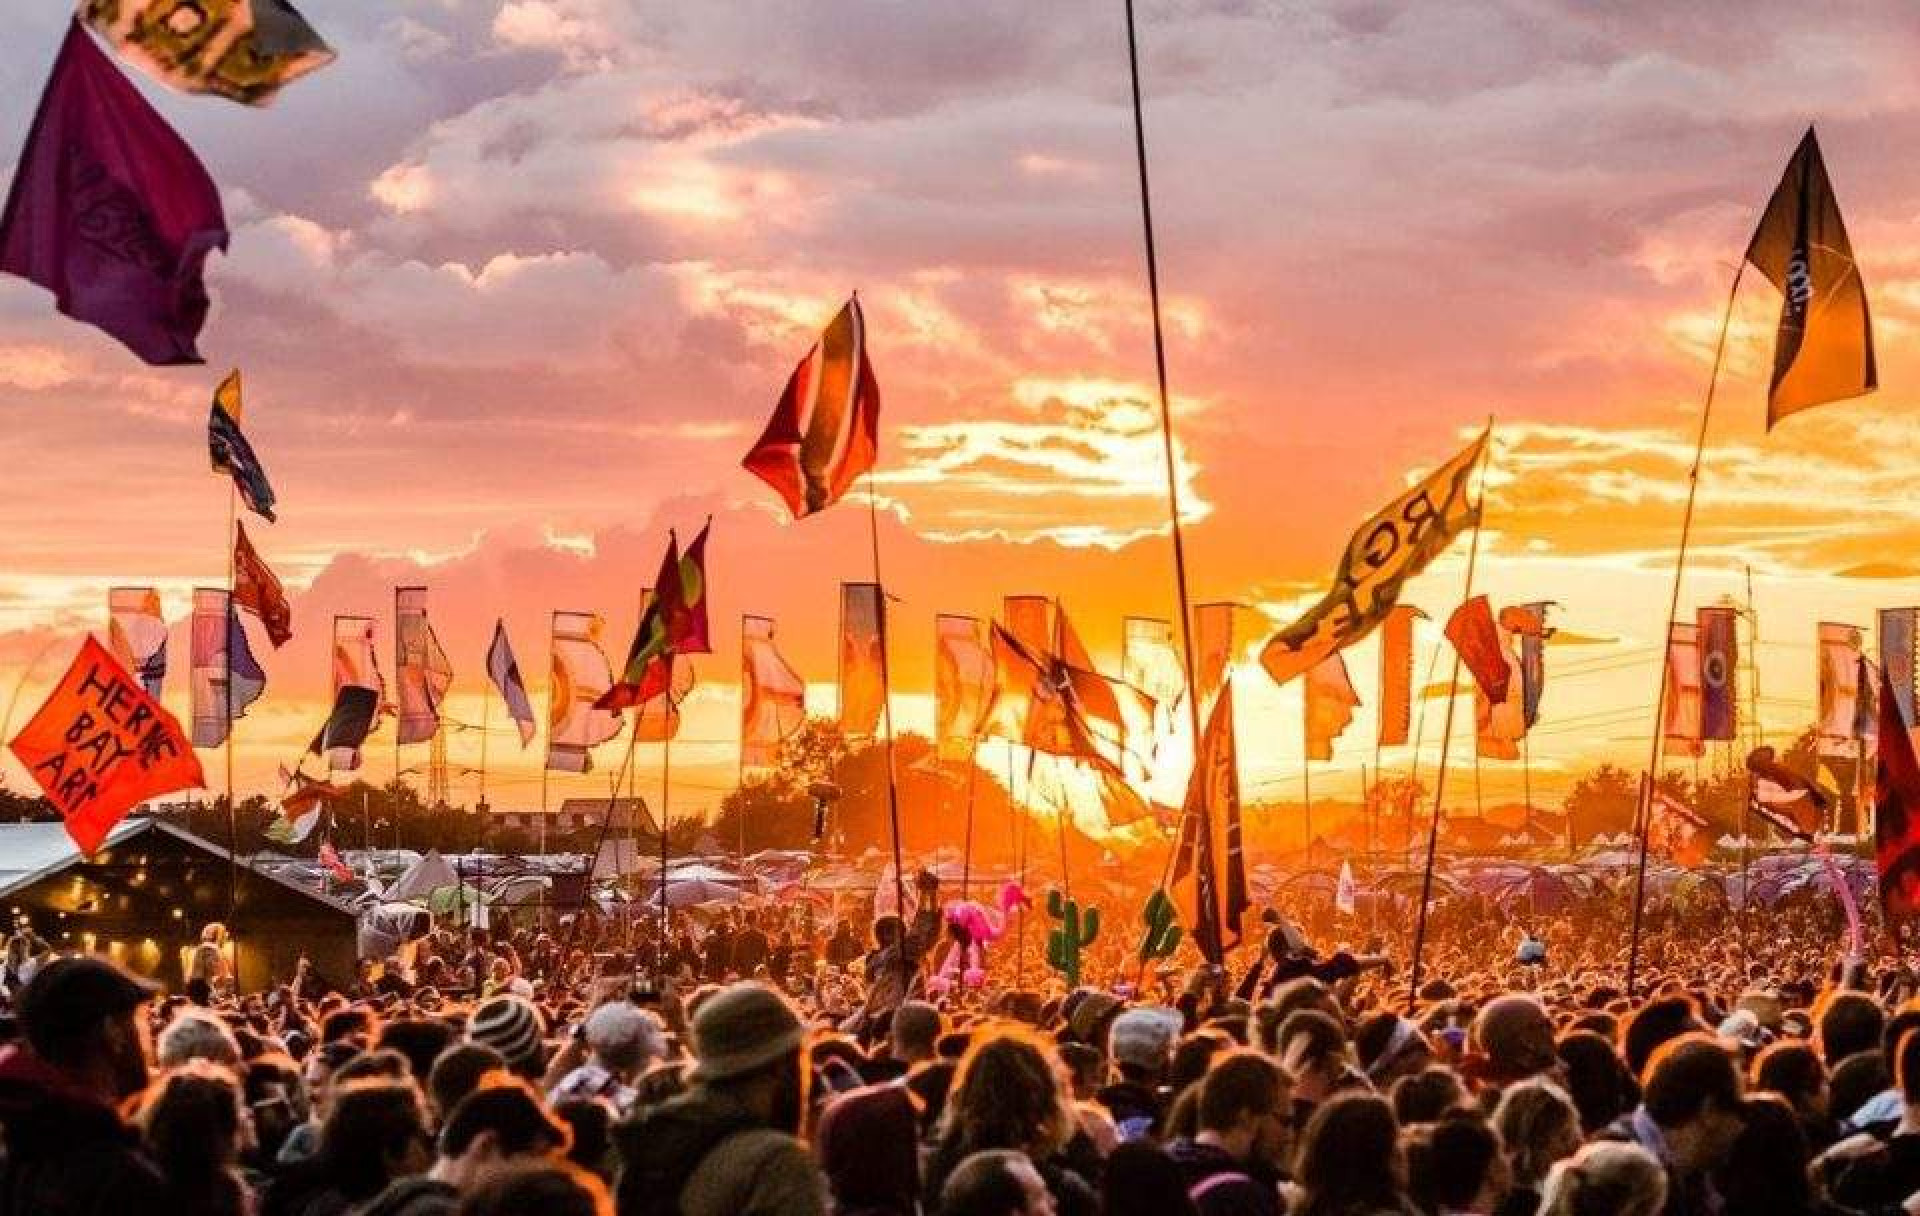 Glastonbury-Festival-2019-RuidoMag-960x608